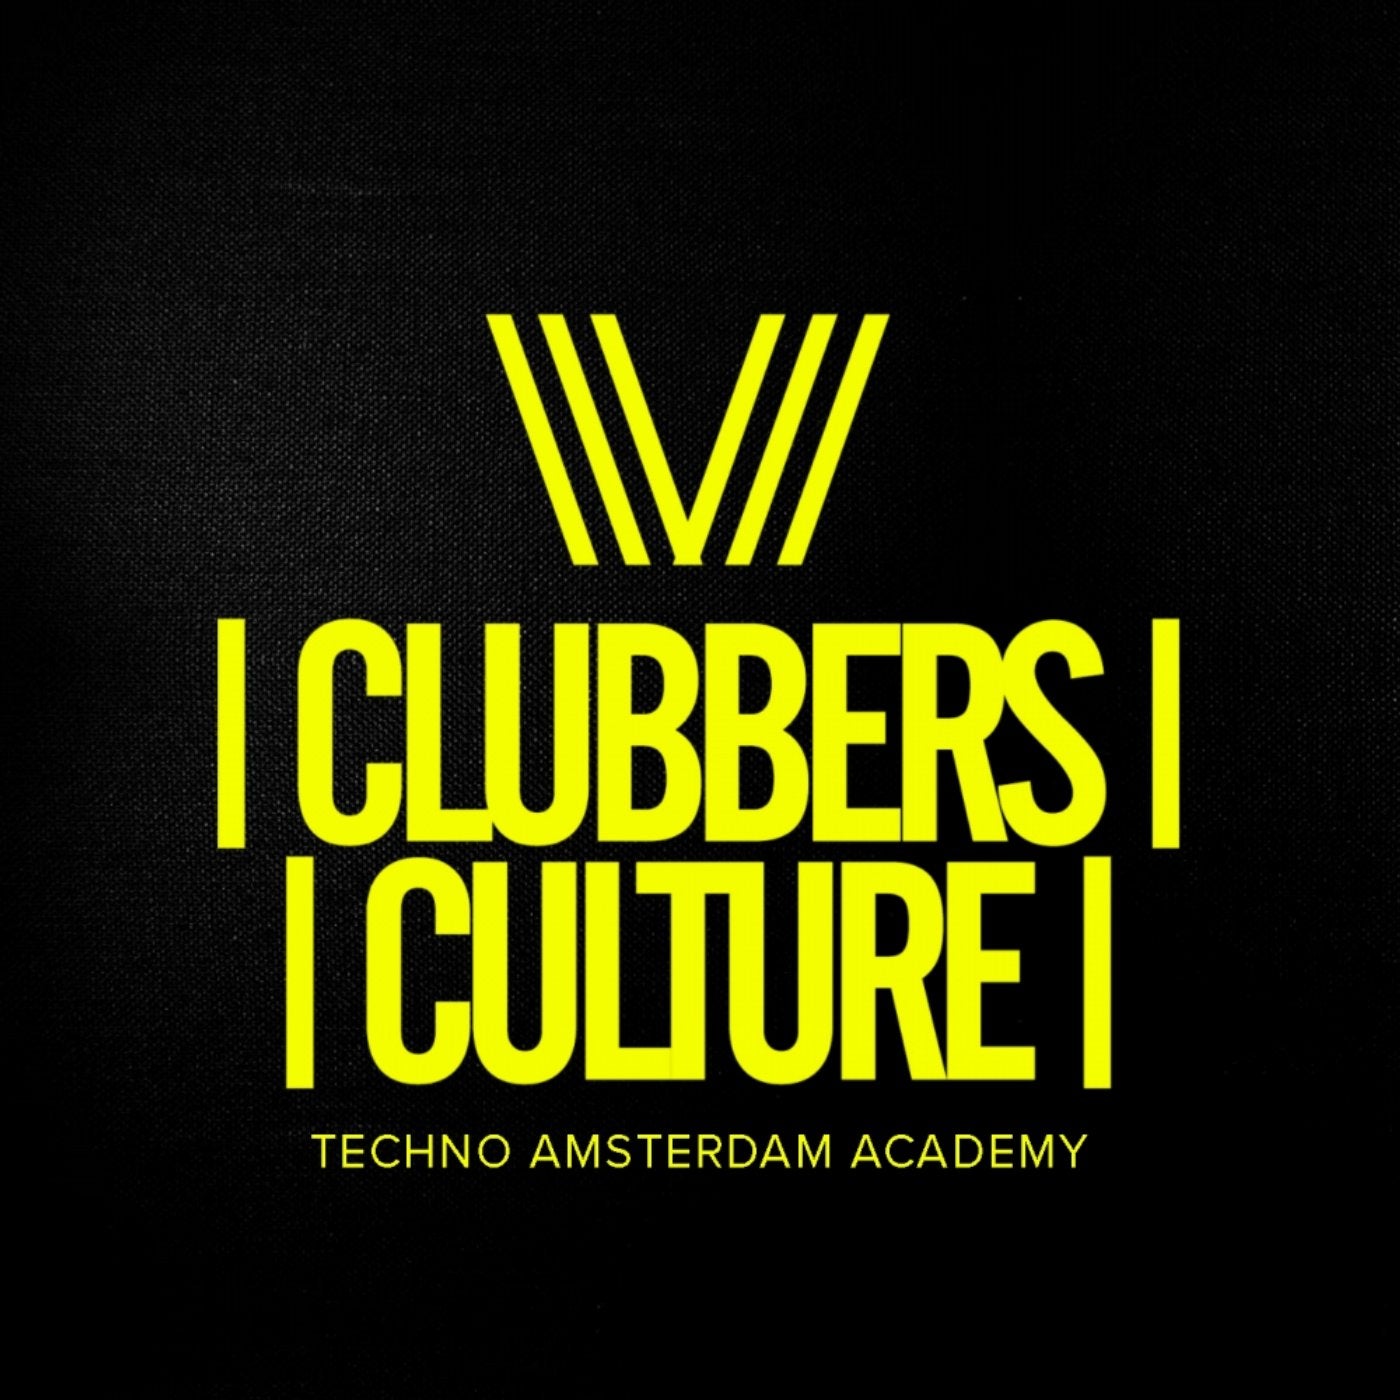 Clubbers Culture: Techno Amsterdam Academy